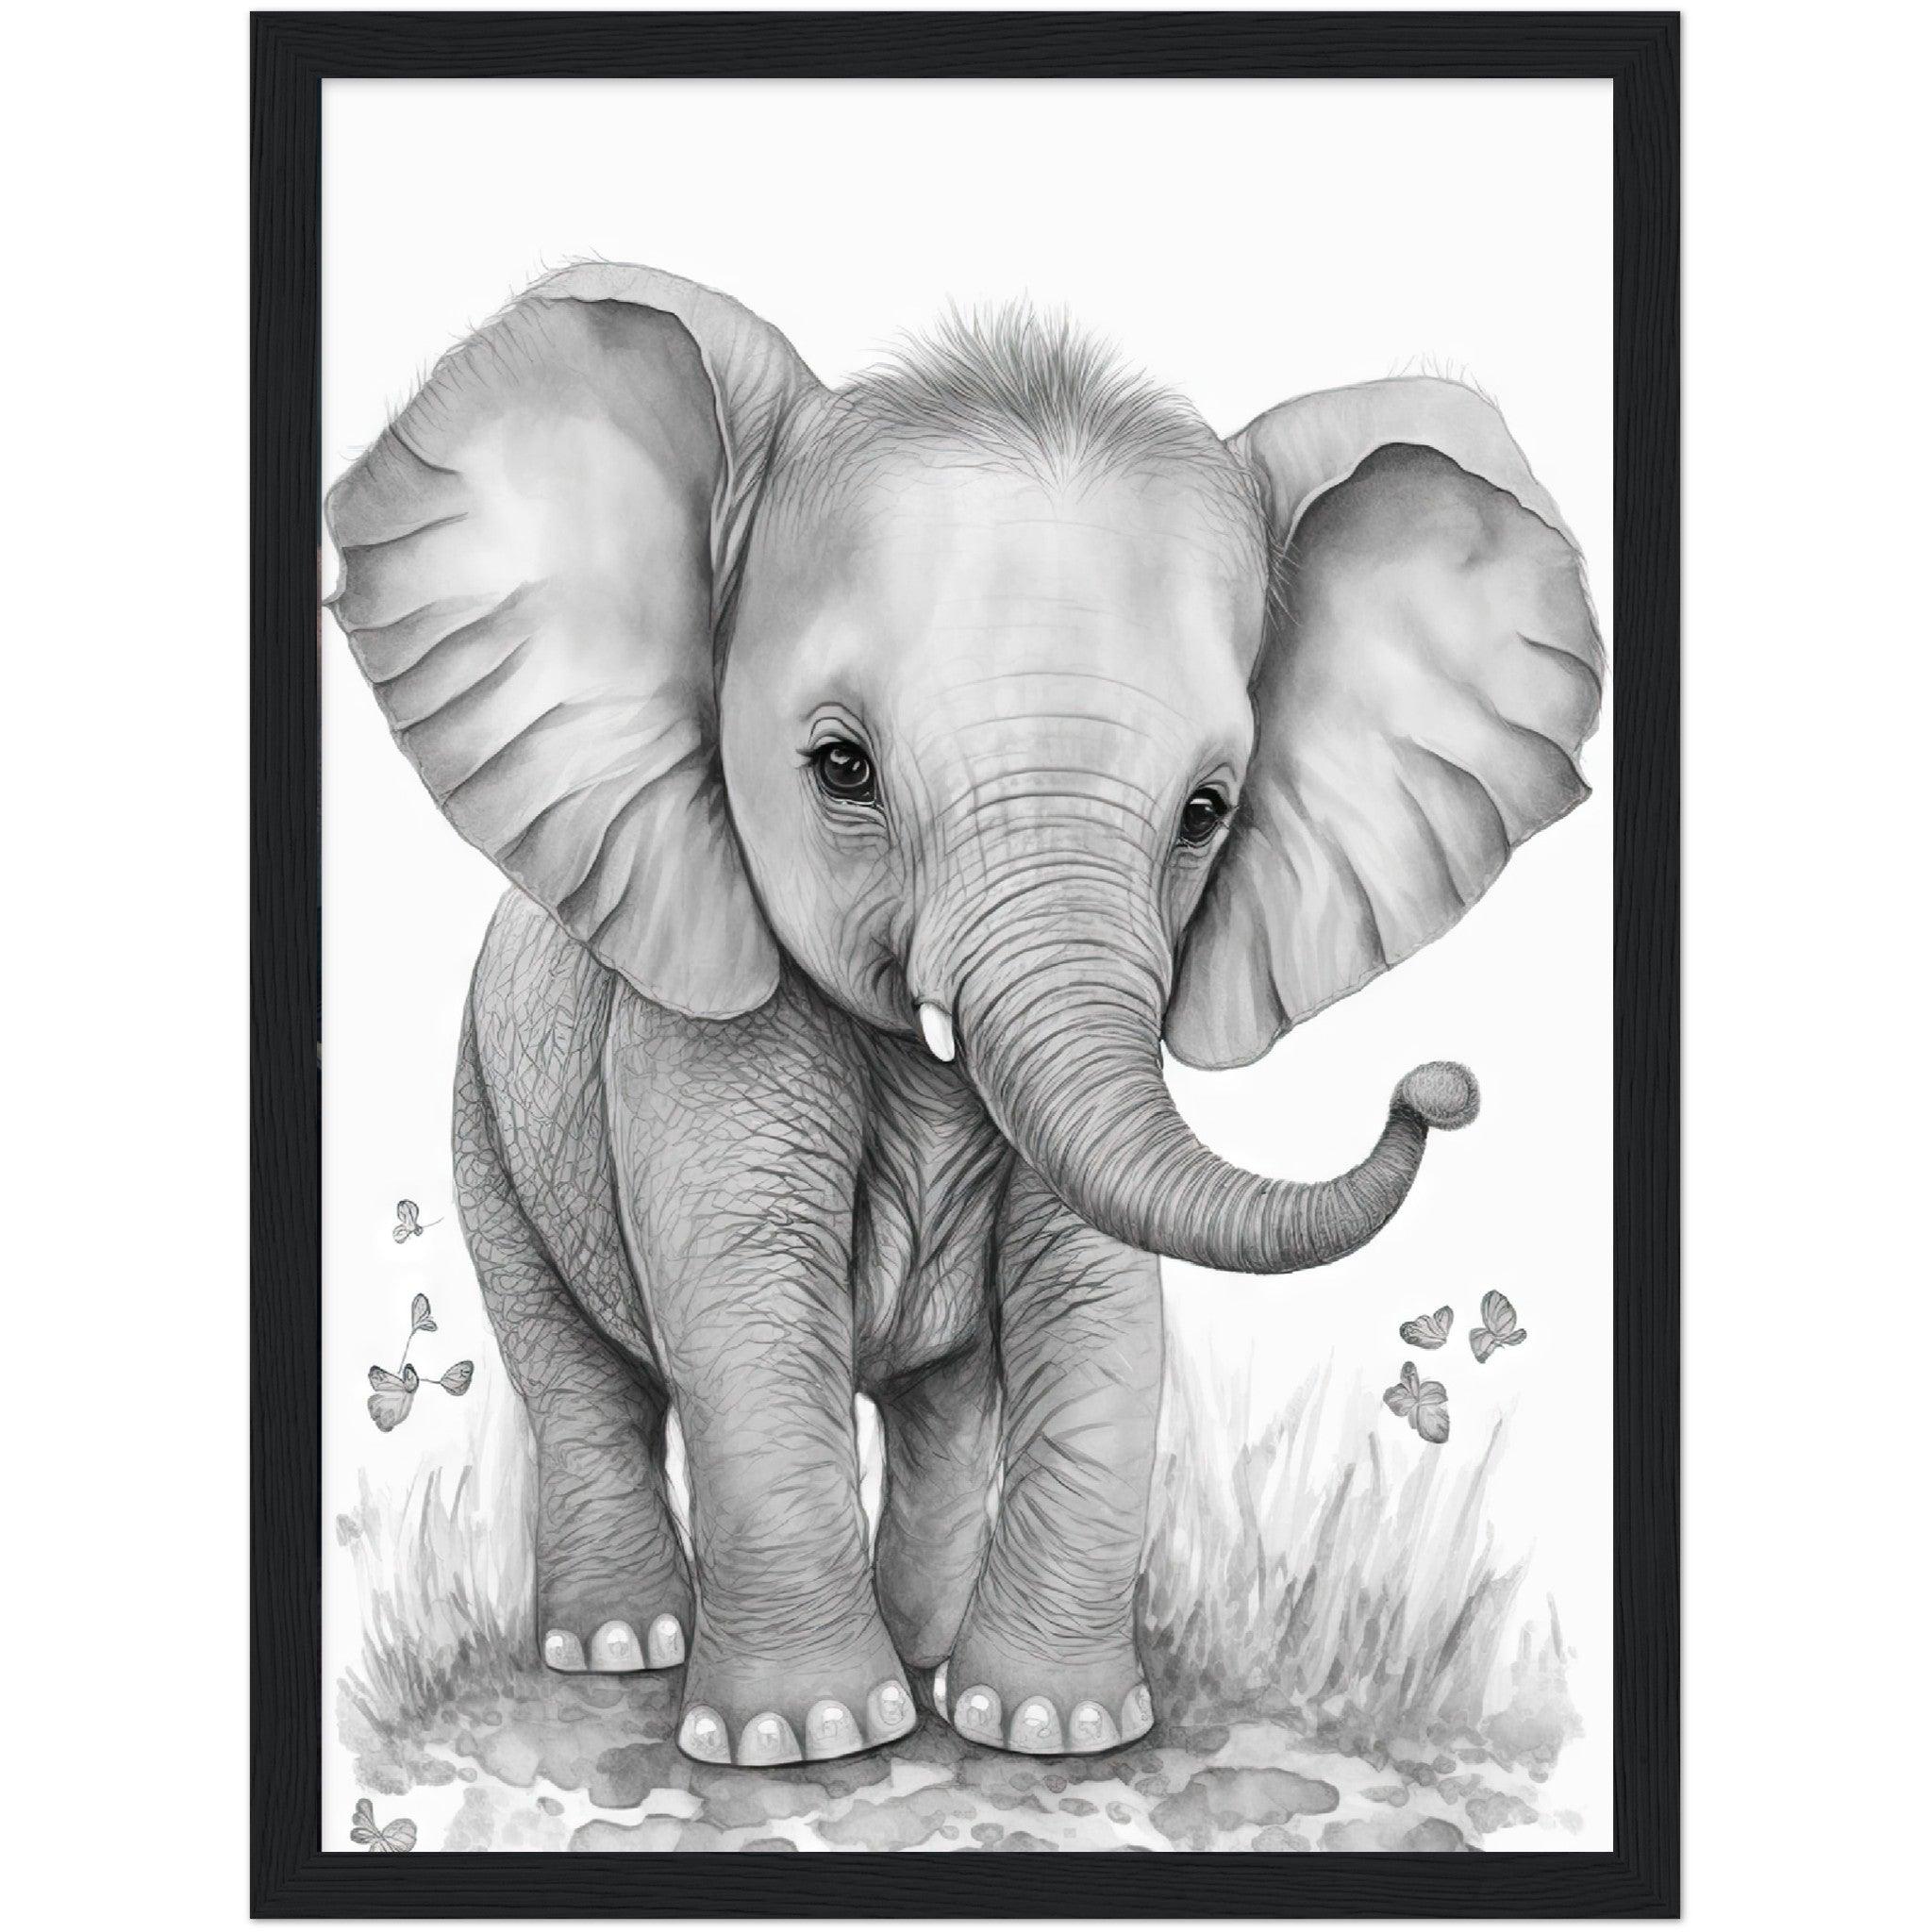 Elephant, pencil sketches :: Behance